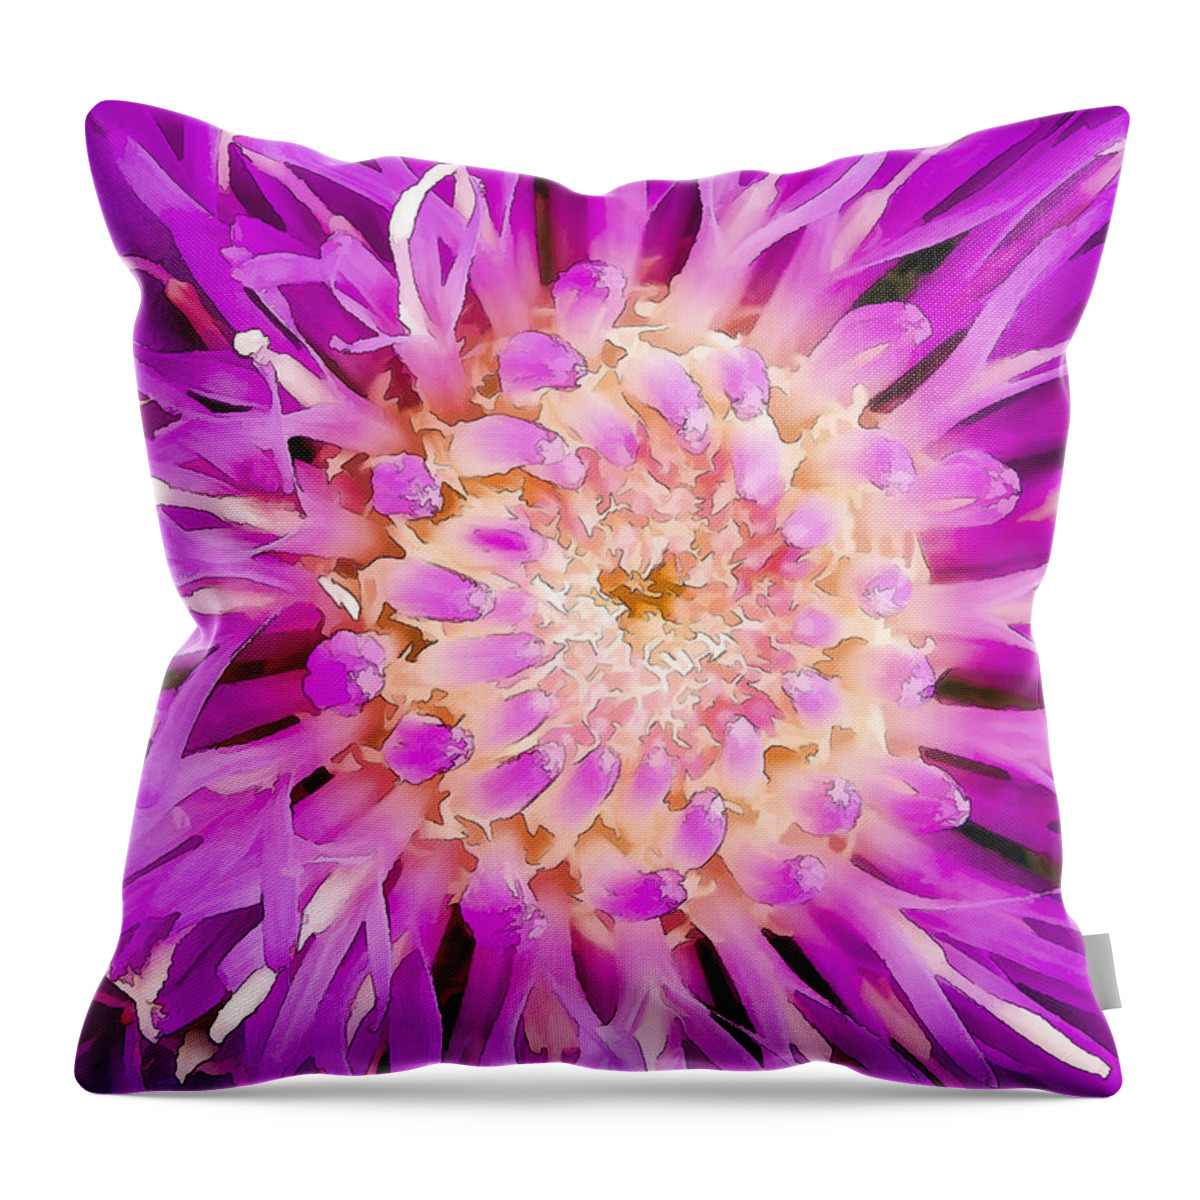 Flower Throw Pillow featuring the digital art Chantilly Lace by Janet Fikar